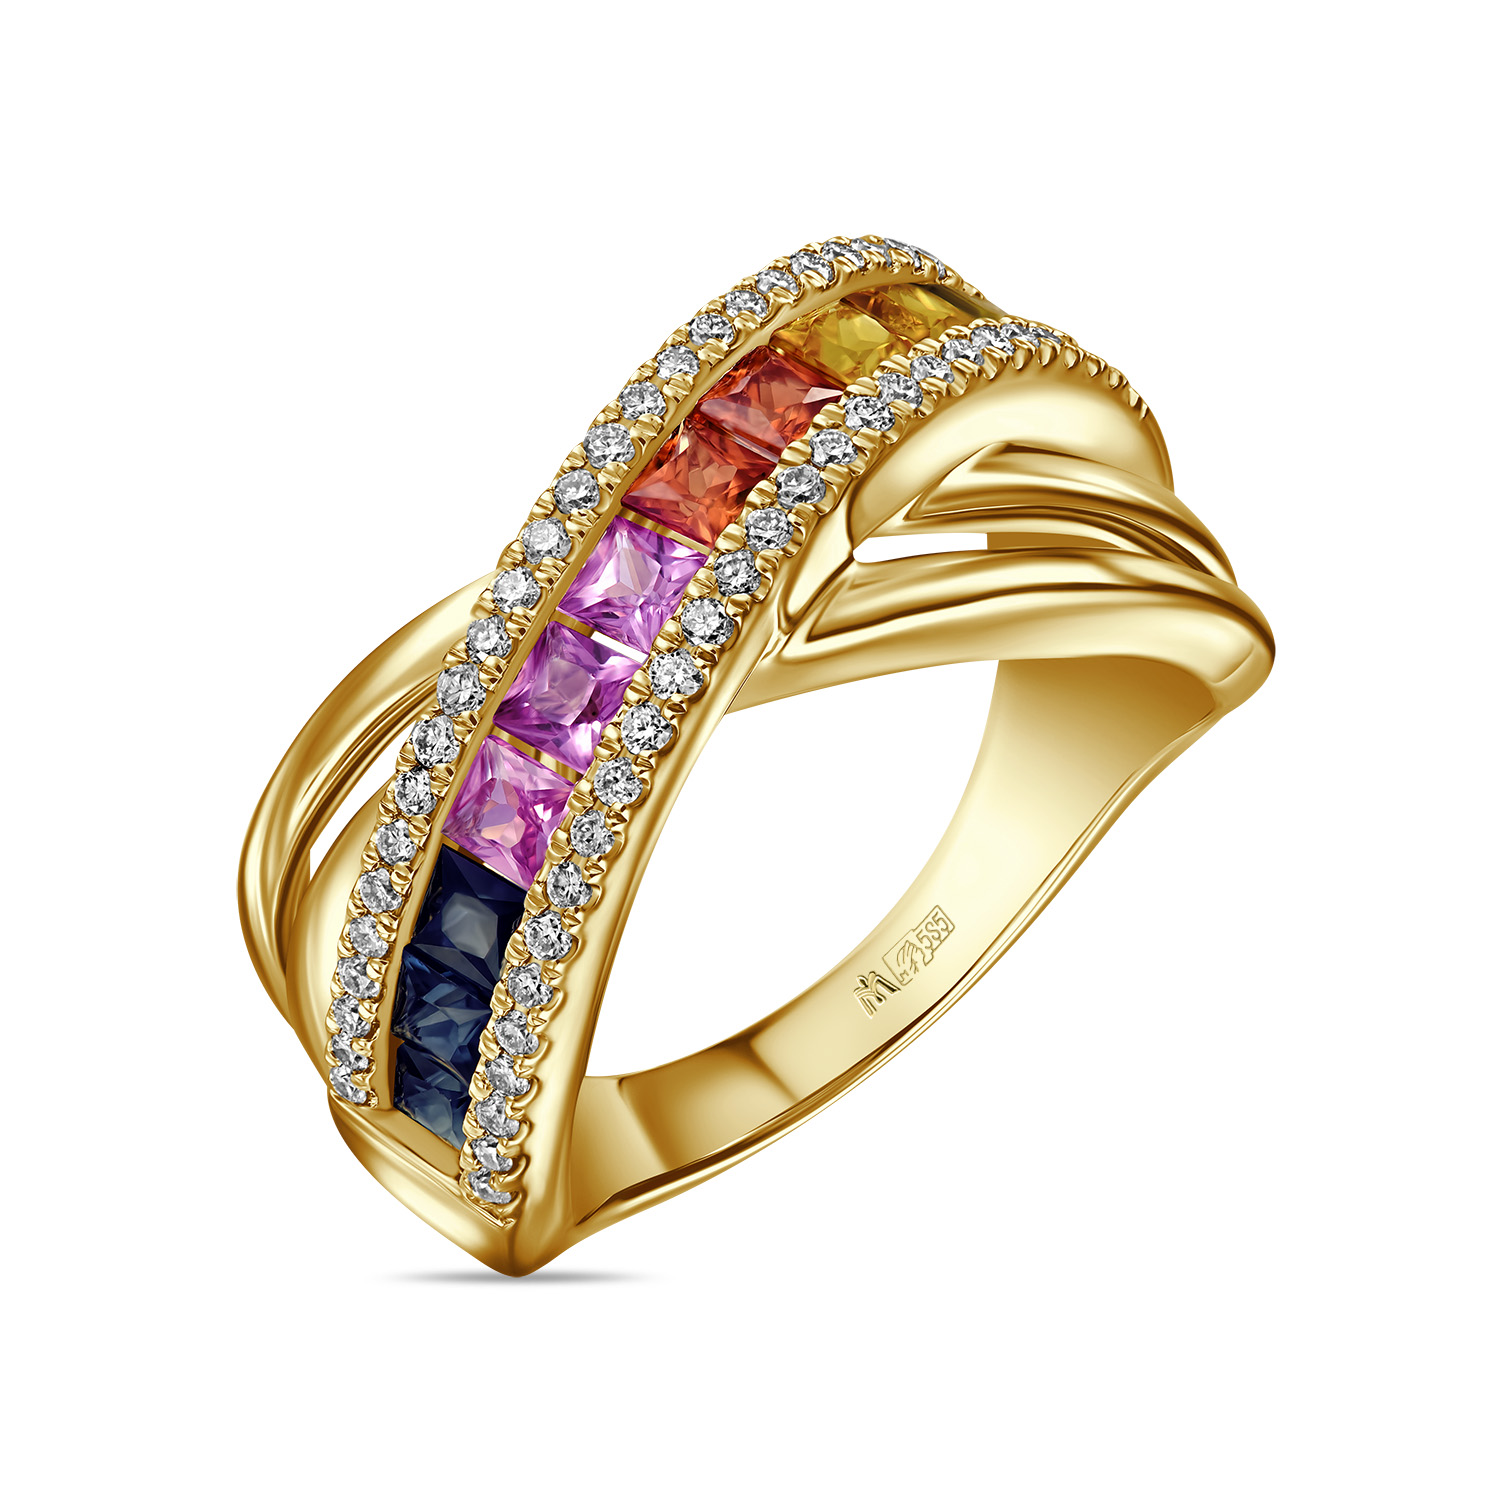 Кольца МЮЗ Кольцо с бриллиантами, сапфирами и цветными сапфирами кольца мюз кольцо с бриллиантами и цветными сапфирами